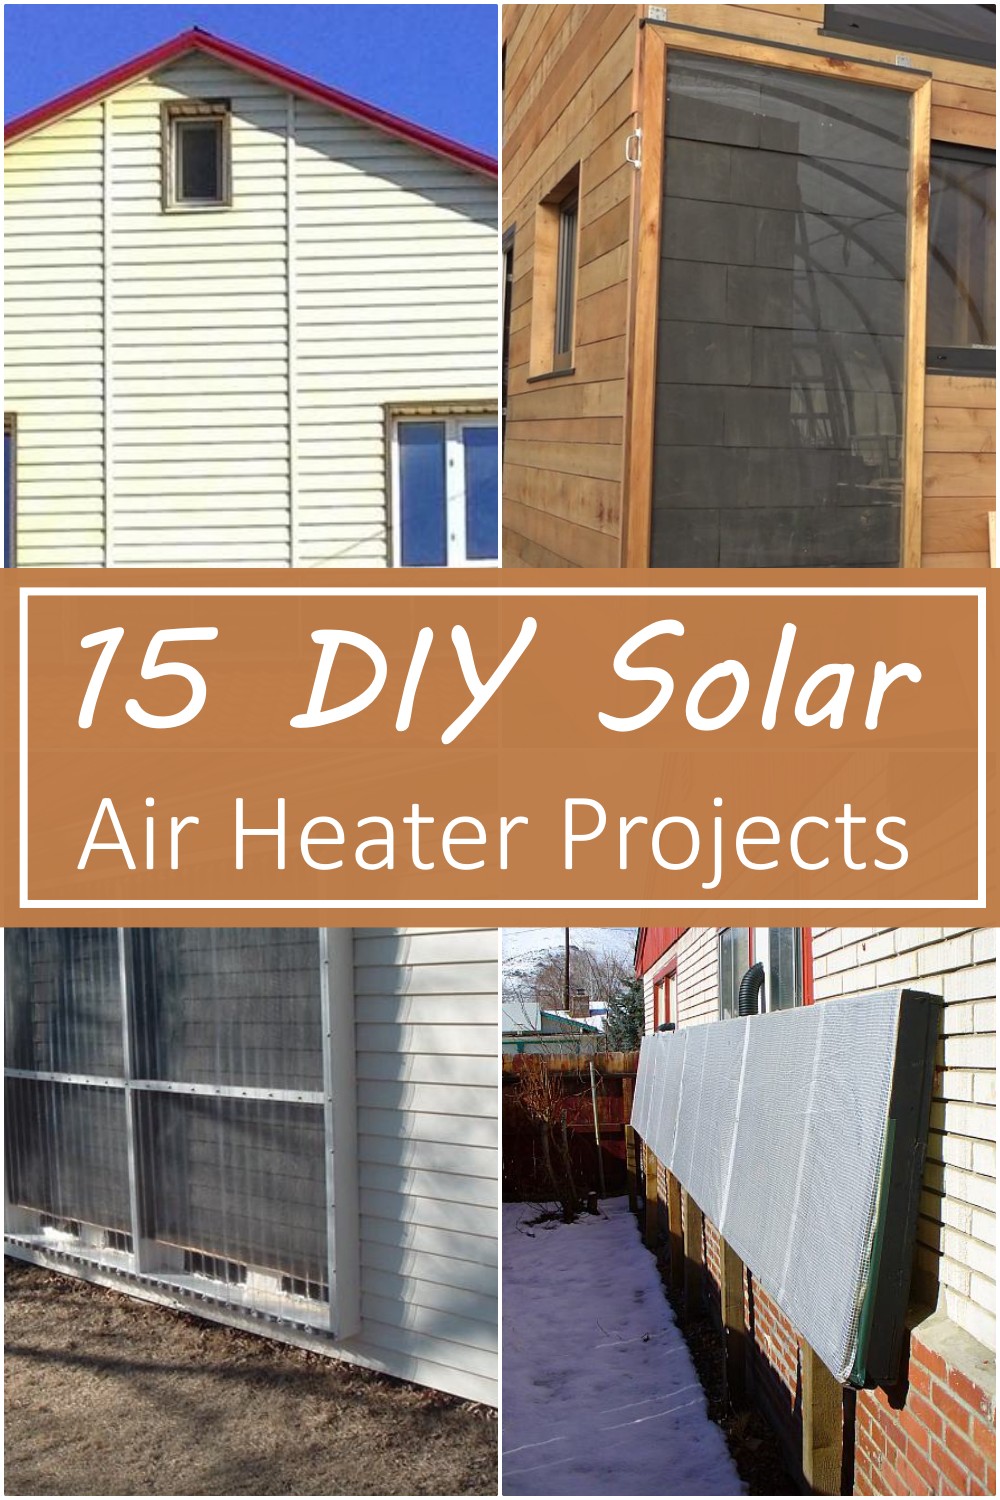 DIY Solar Air Heater Projects